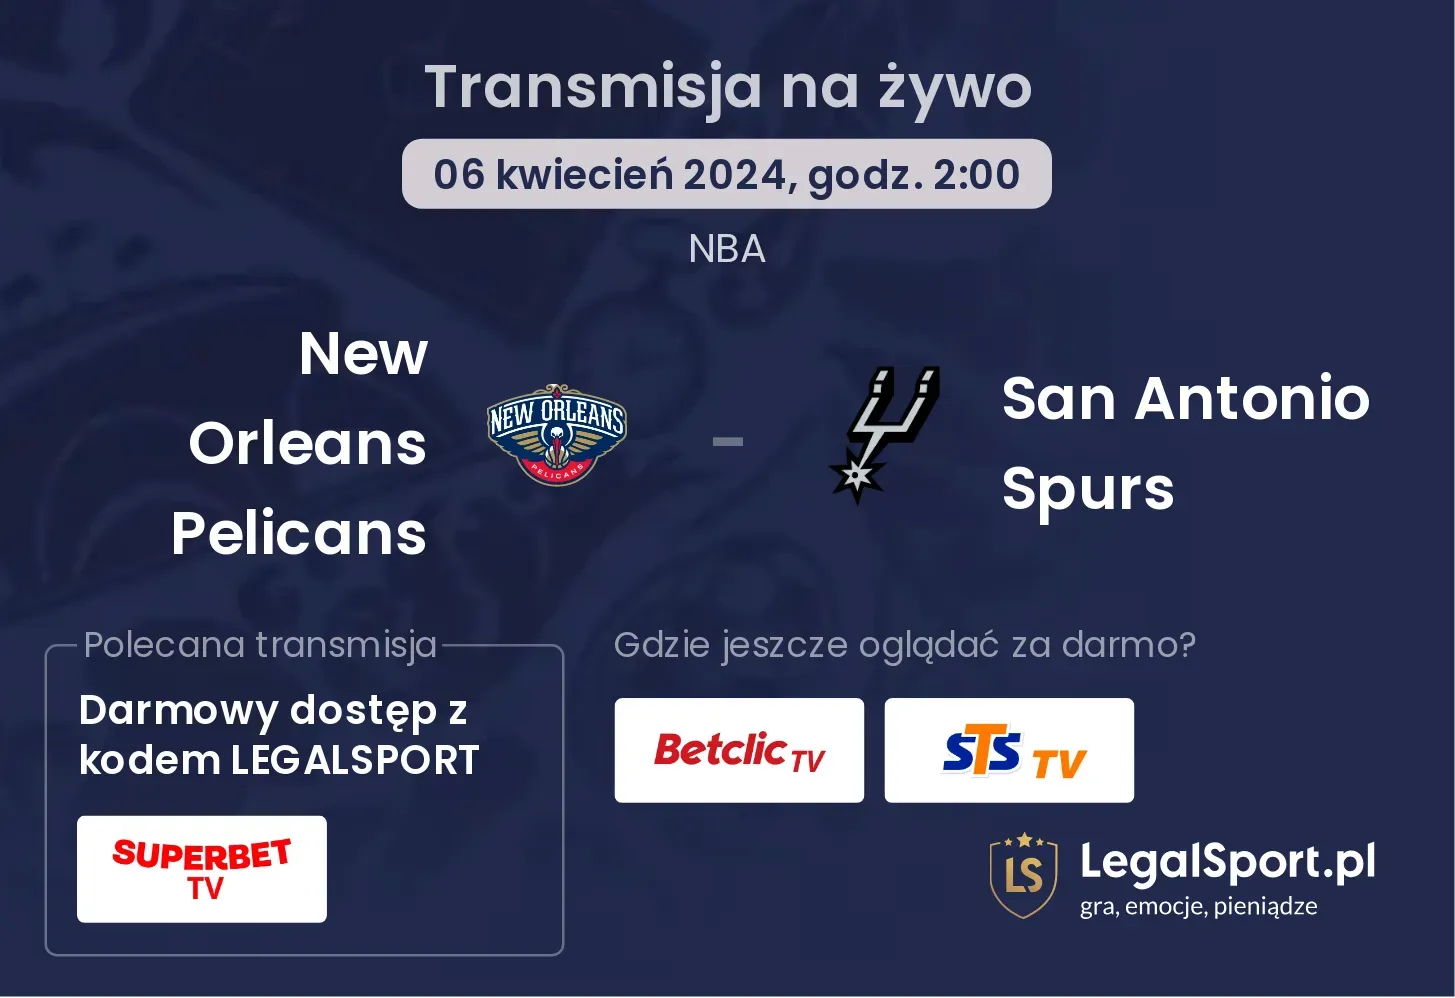 New Orleans Pelicans - San Antonio Spurs transmisja na żywo